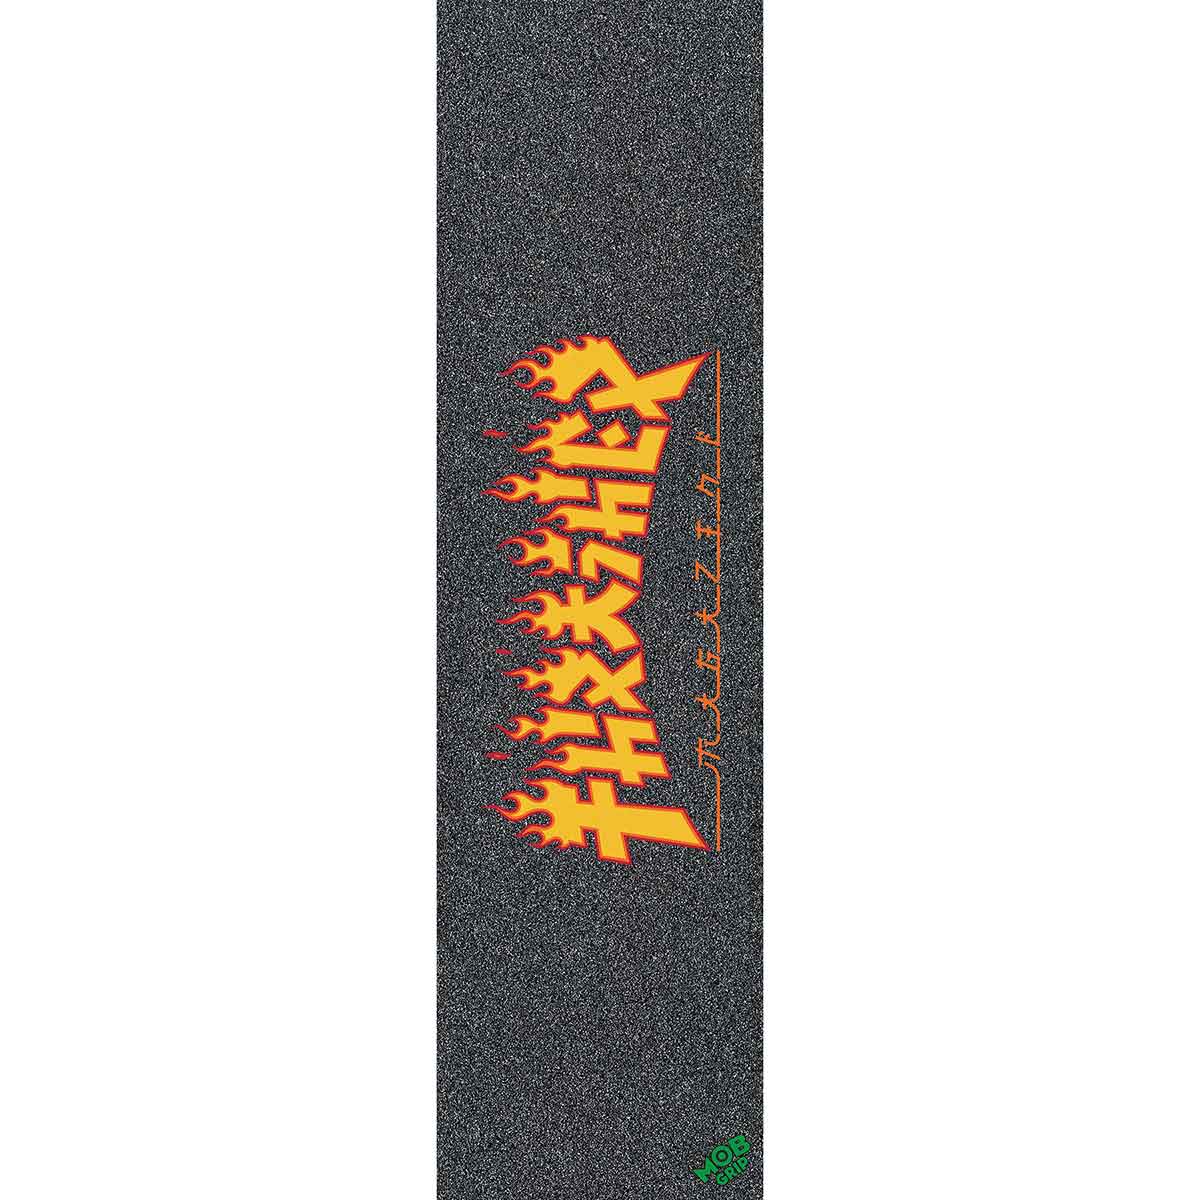 Mob Grip Grip Skateboard Thrasher Yellow and Orange Flame